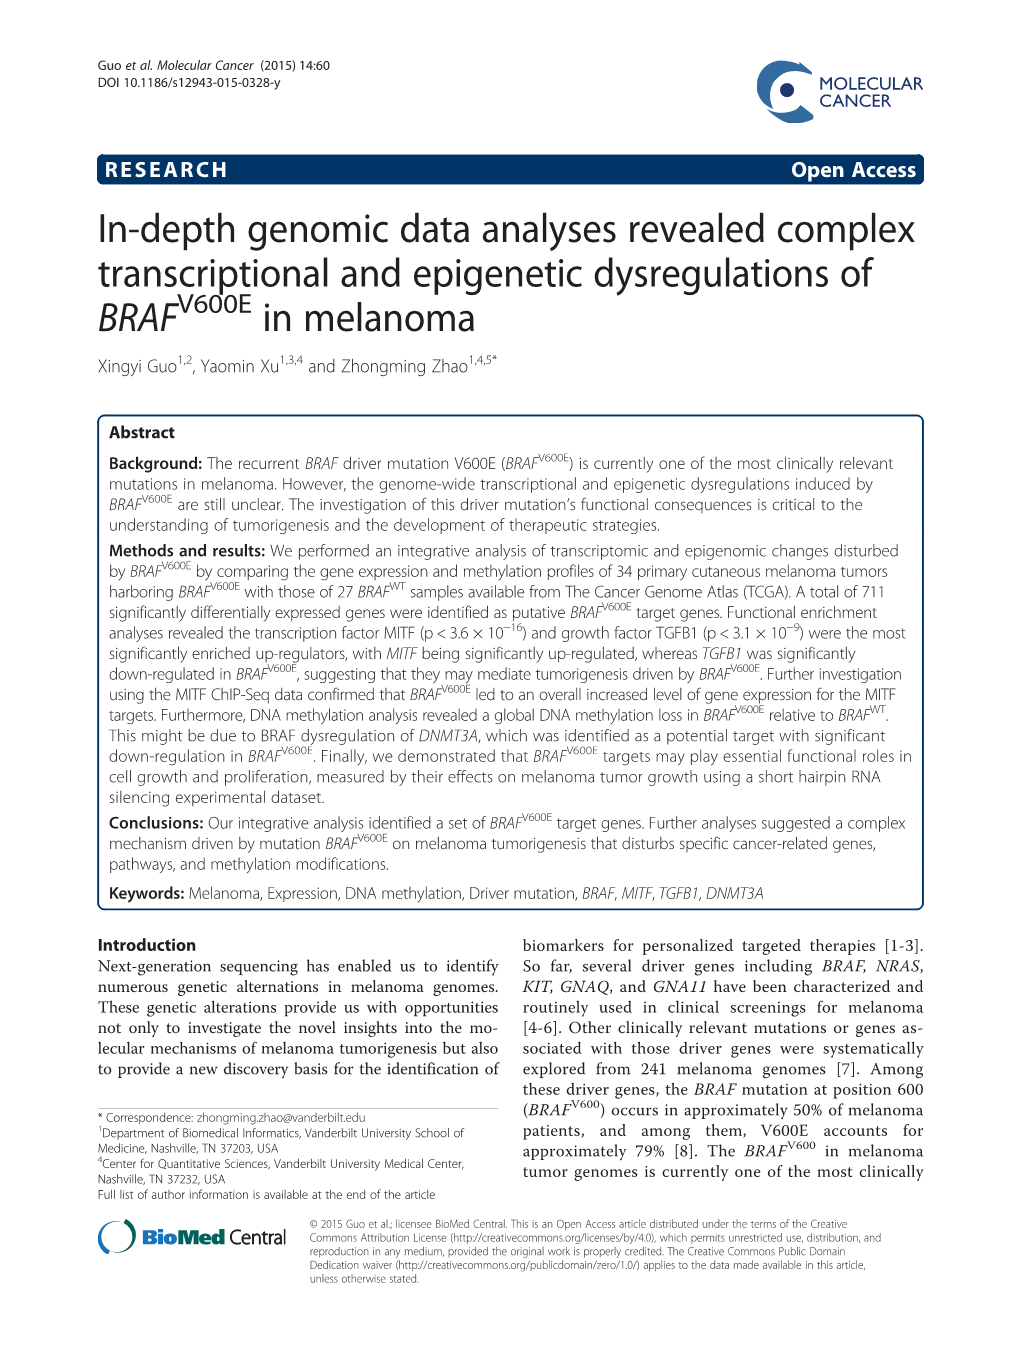 In-Depth Genomic Data Analyses Revealed Complex Transcriptional